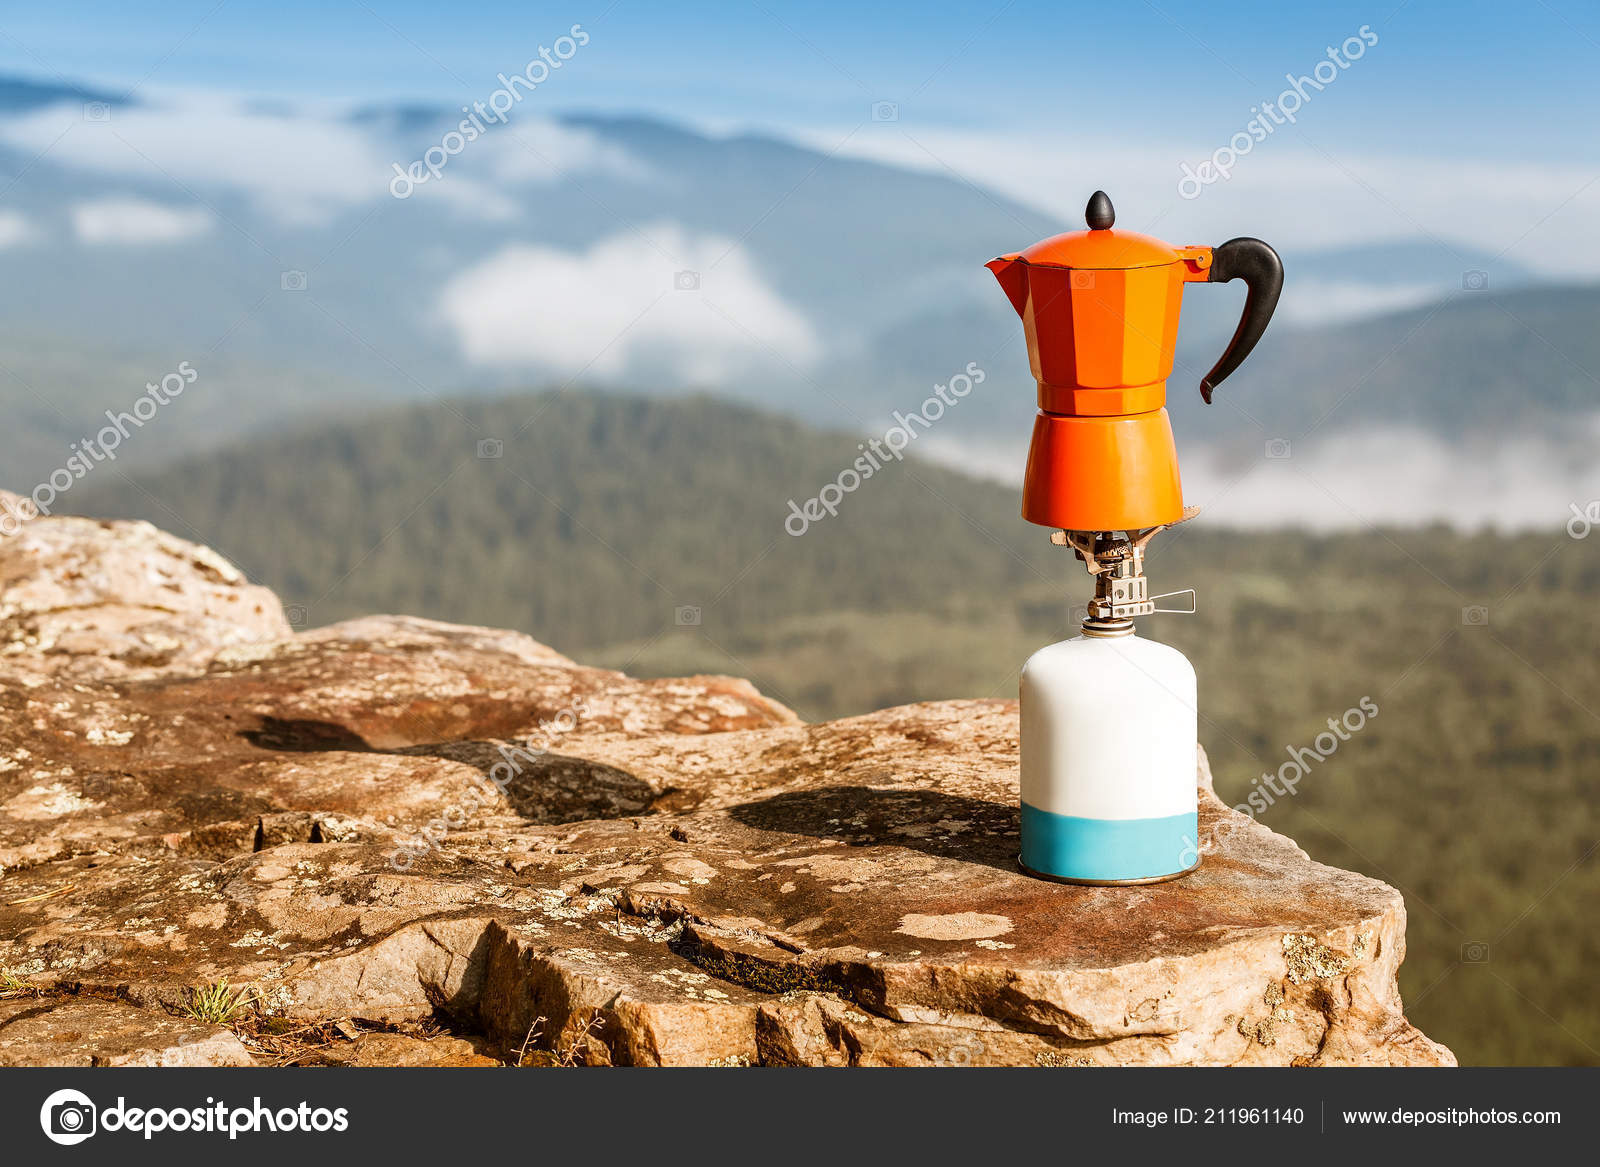 https://st4.depositphotos.com/1005632/21196/i/1600/depositphotos_211961140-stock-photo-geyser-aluminium-coffee-maker-background.jpg